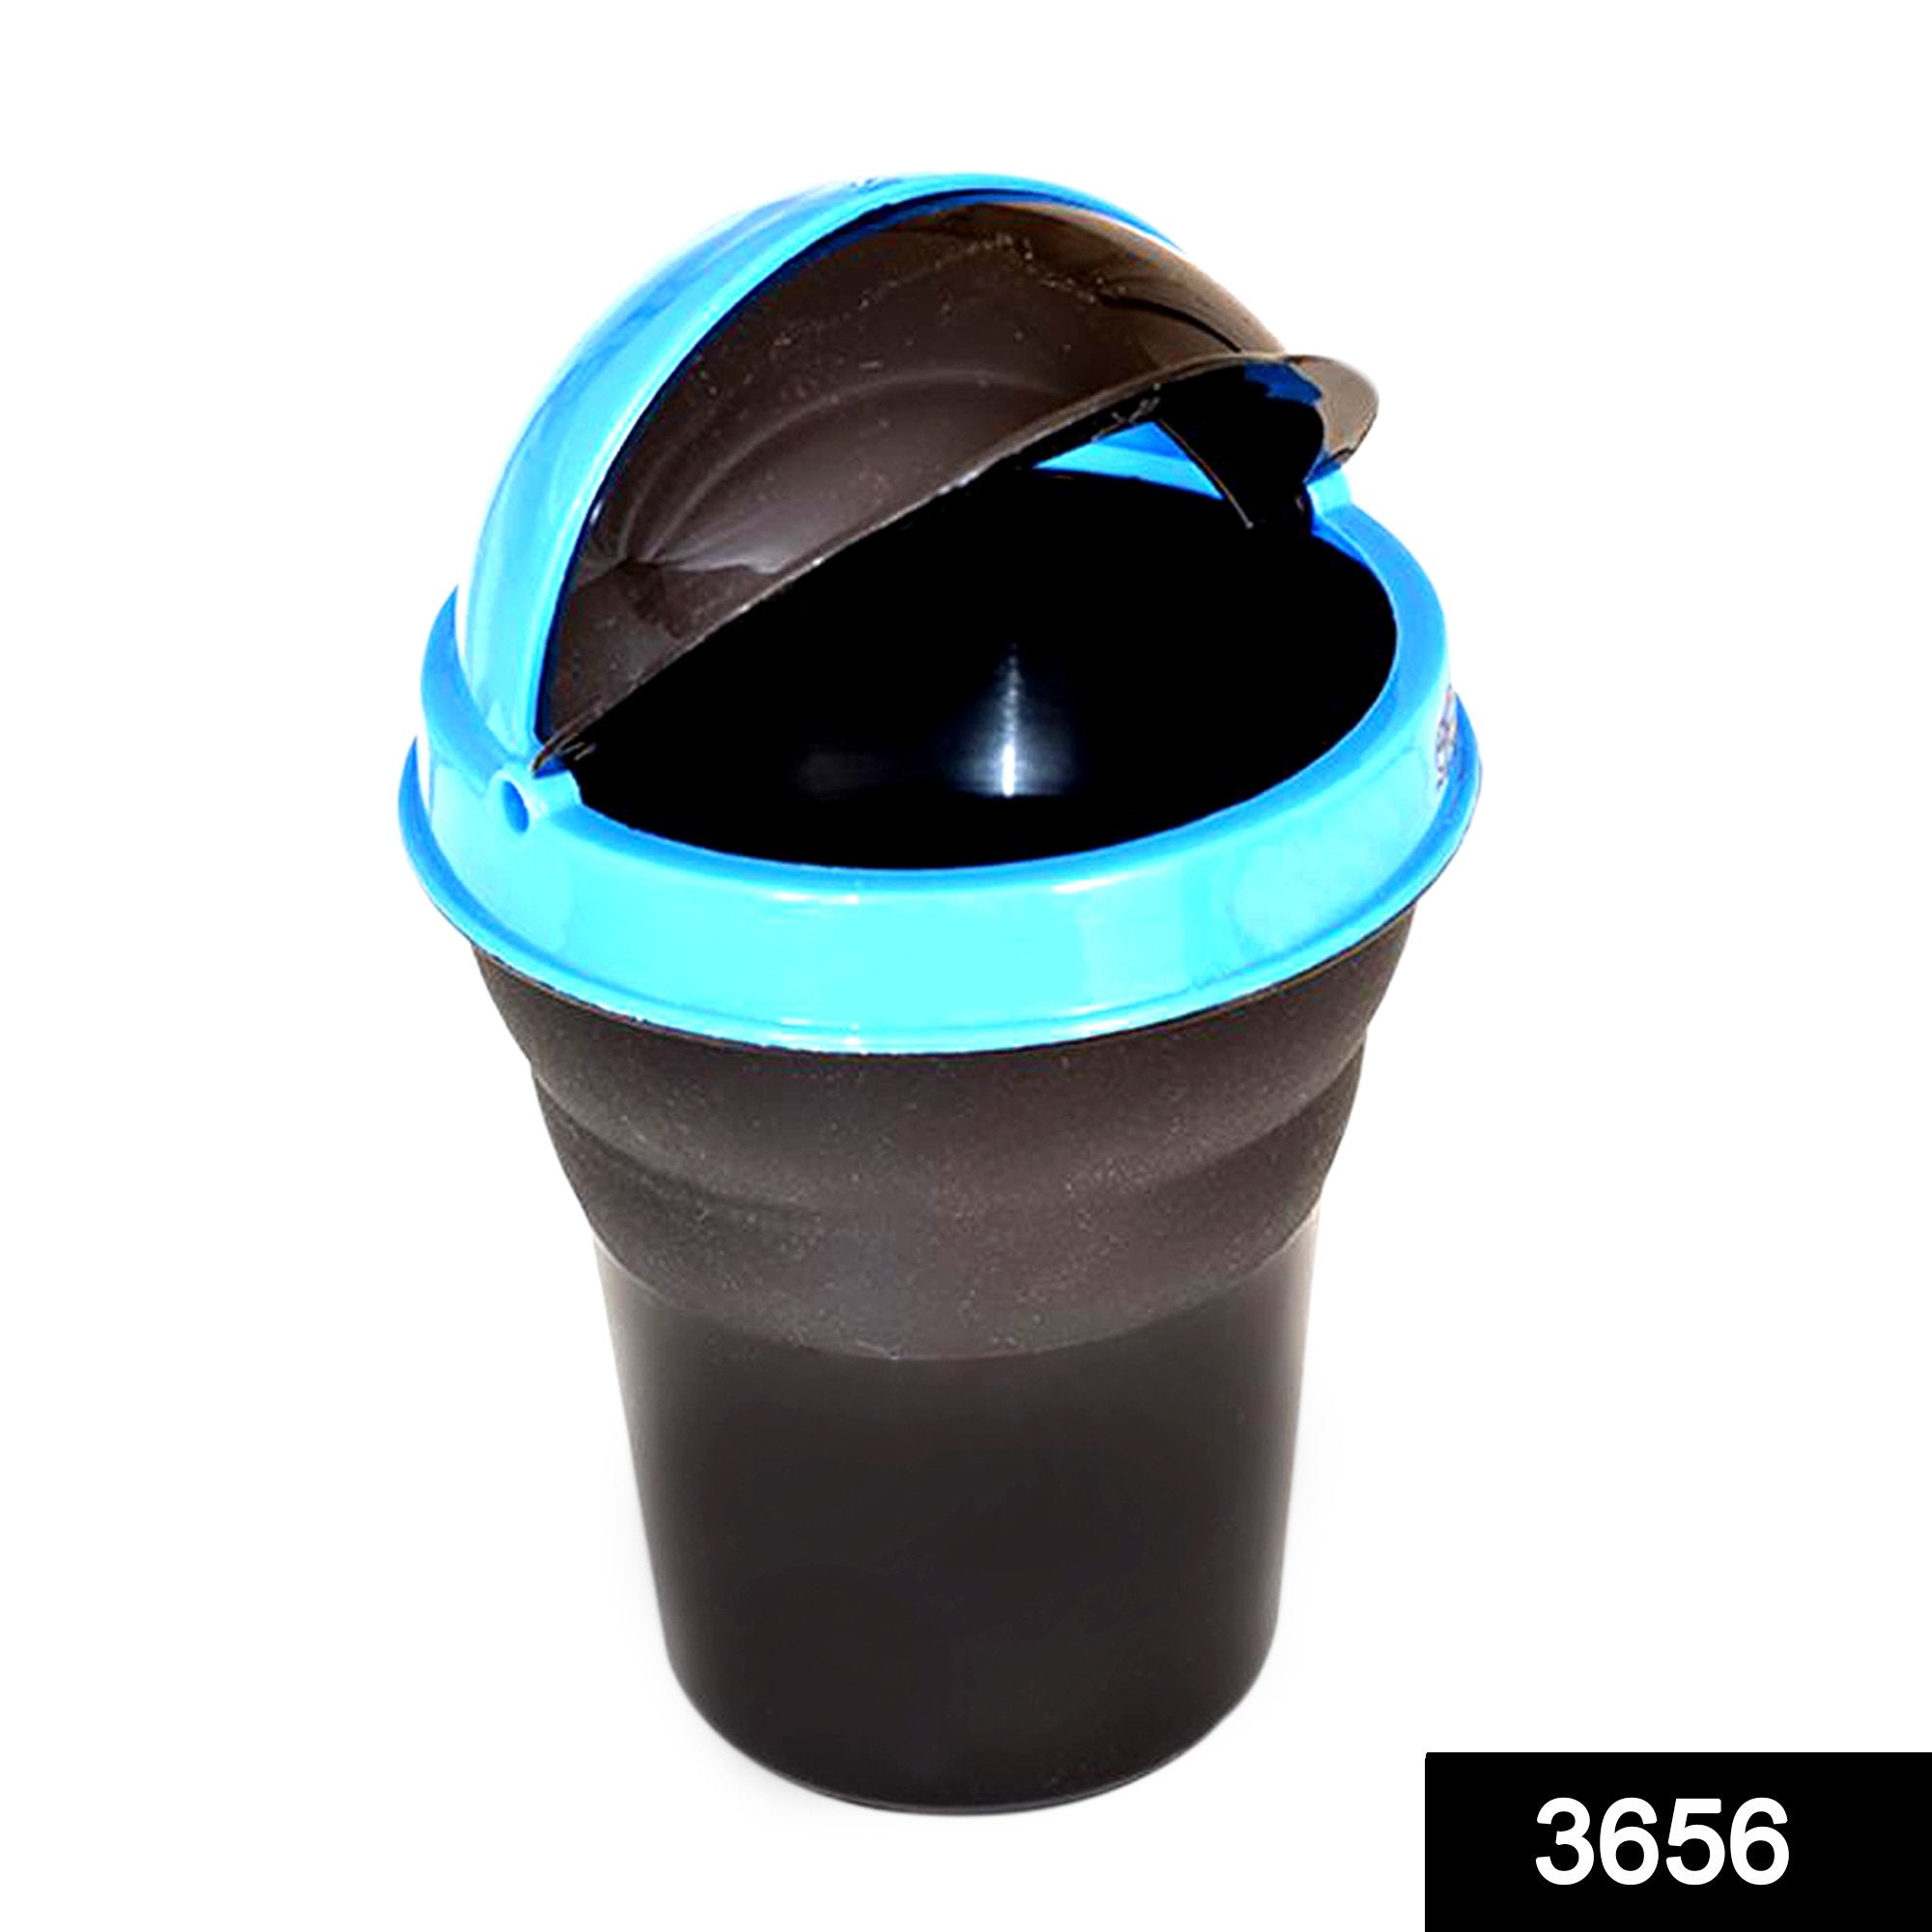 3656 Plastic Car Mini Dustbin/Trash Bin Dust Case Best for Traveling (Multicolour) - SkyShopy